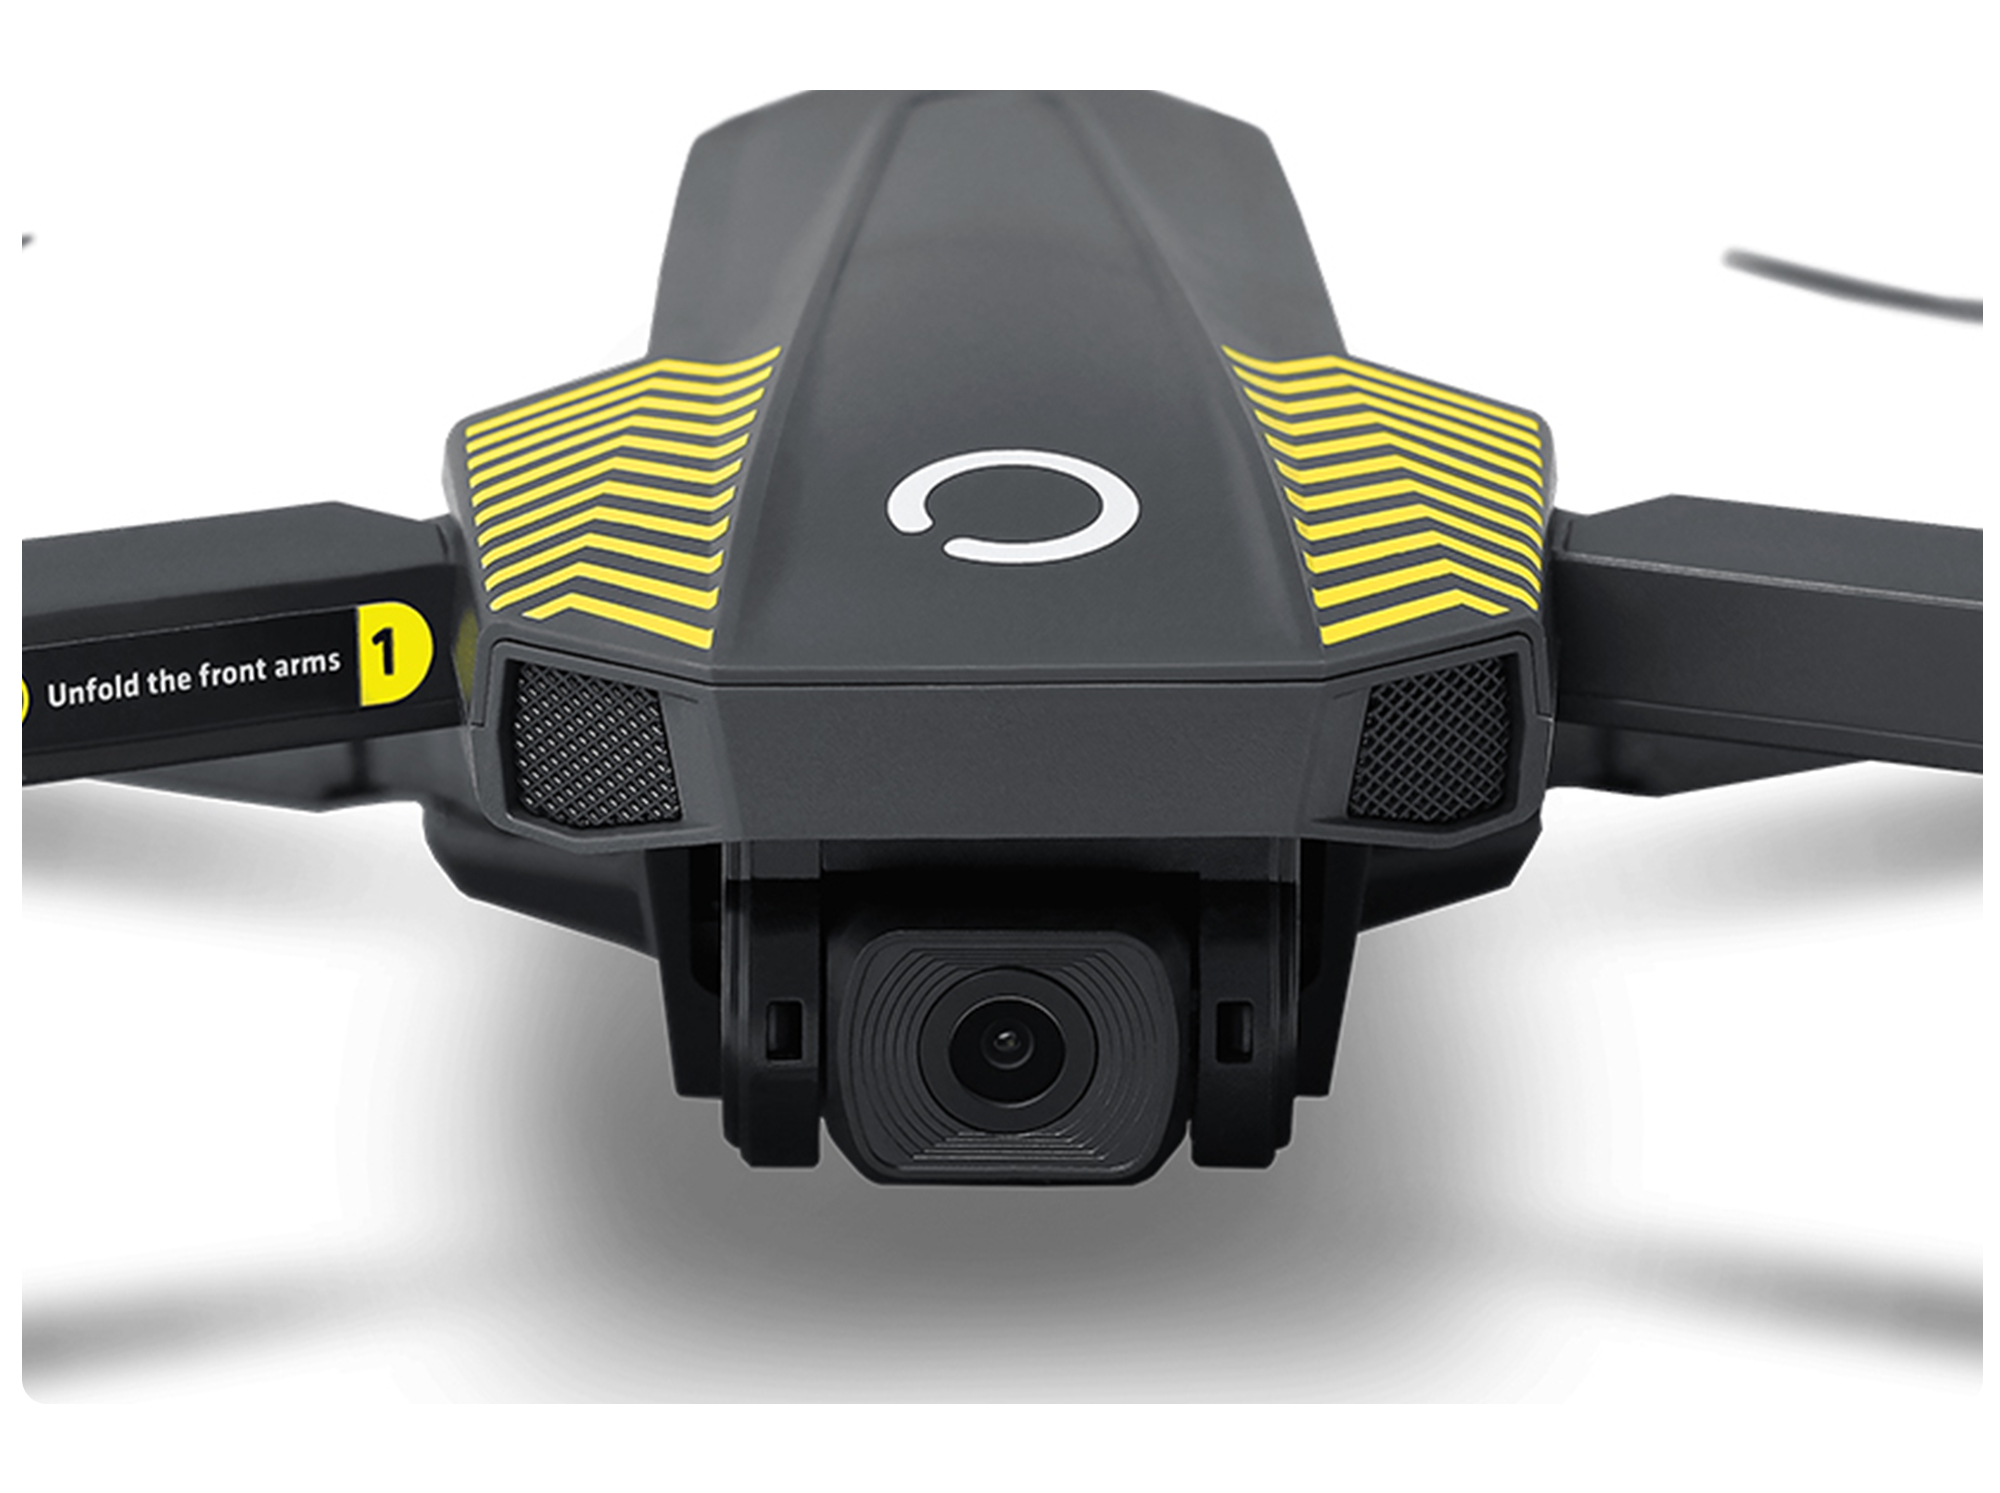 Dron Overmax X-Bee Drone 9.5 Fold